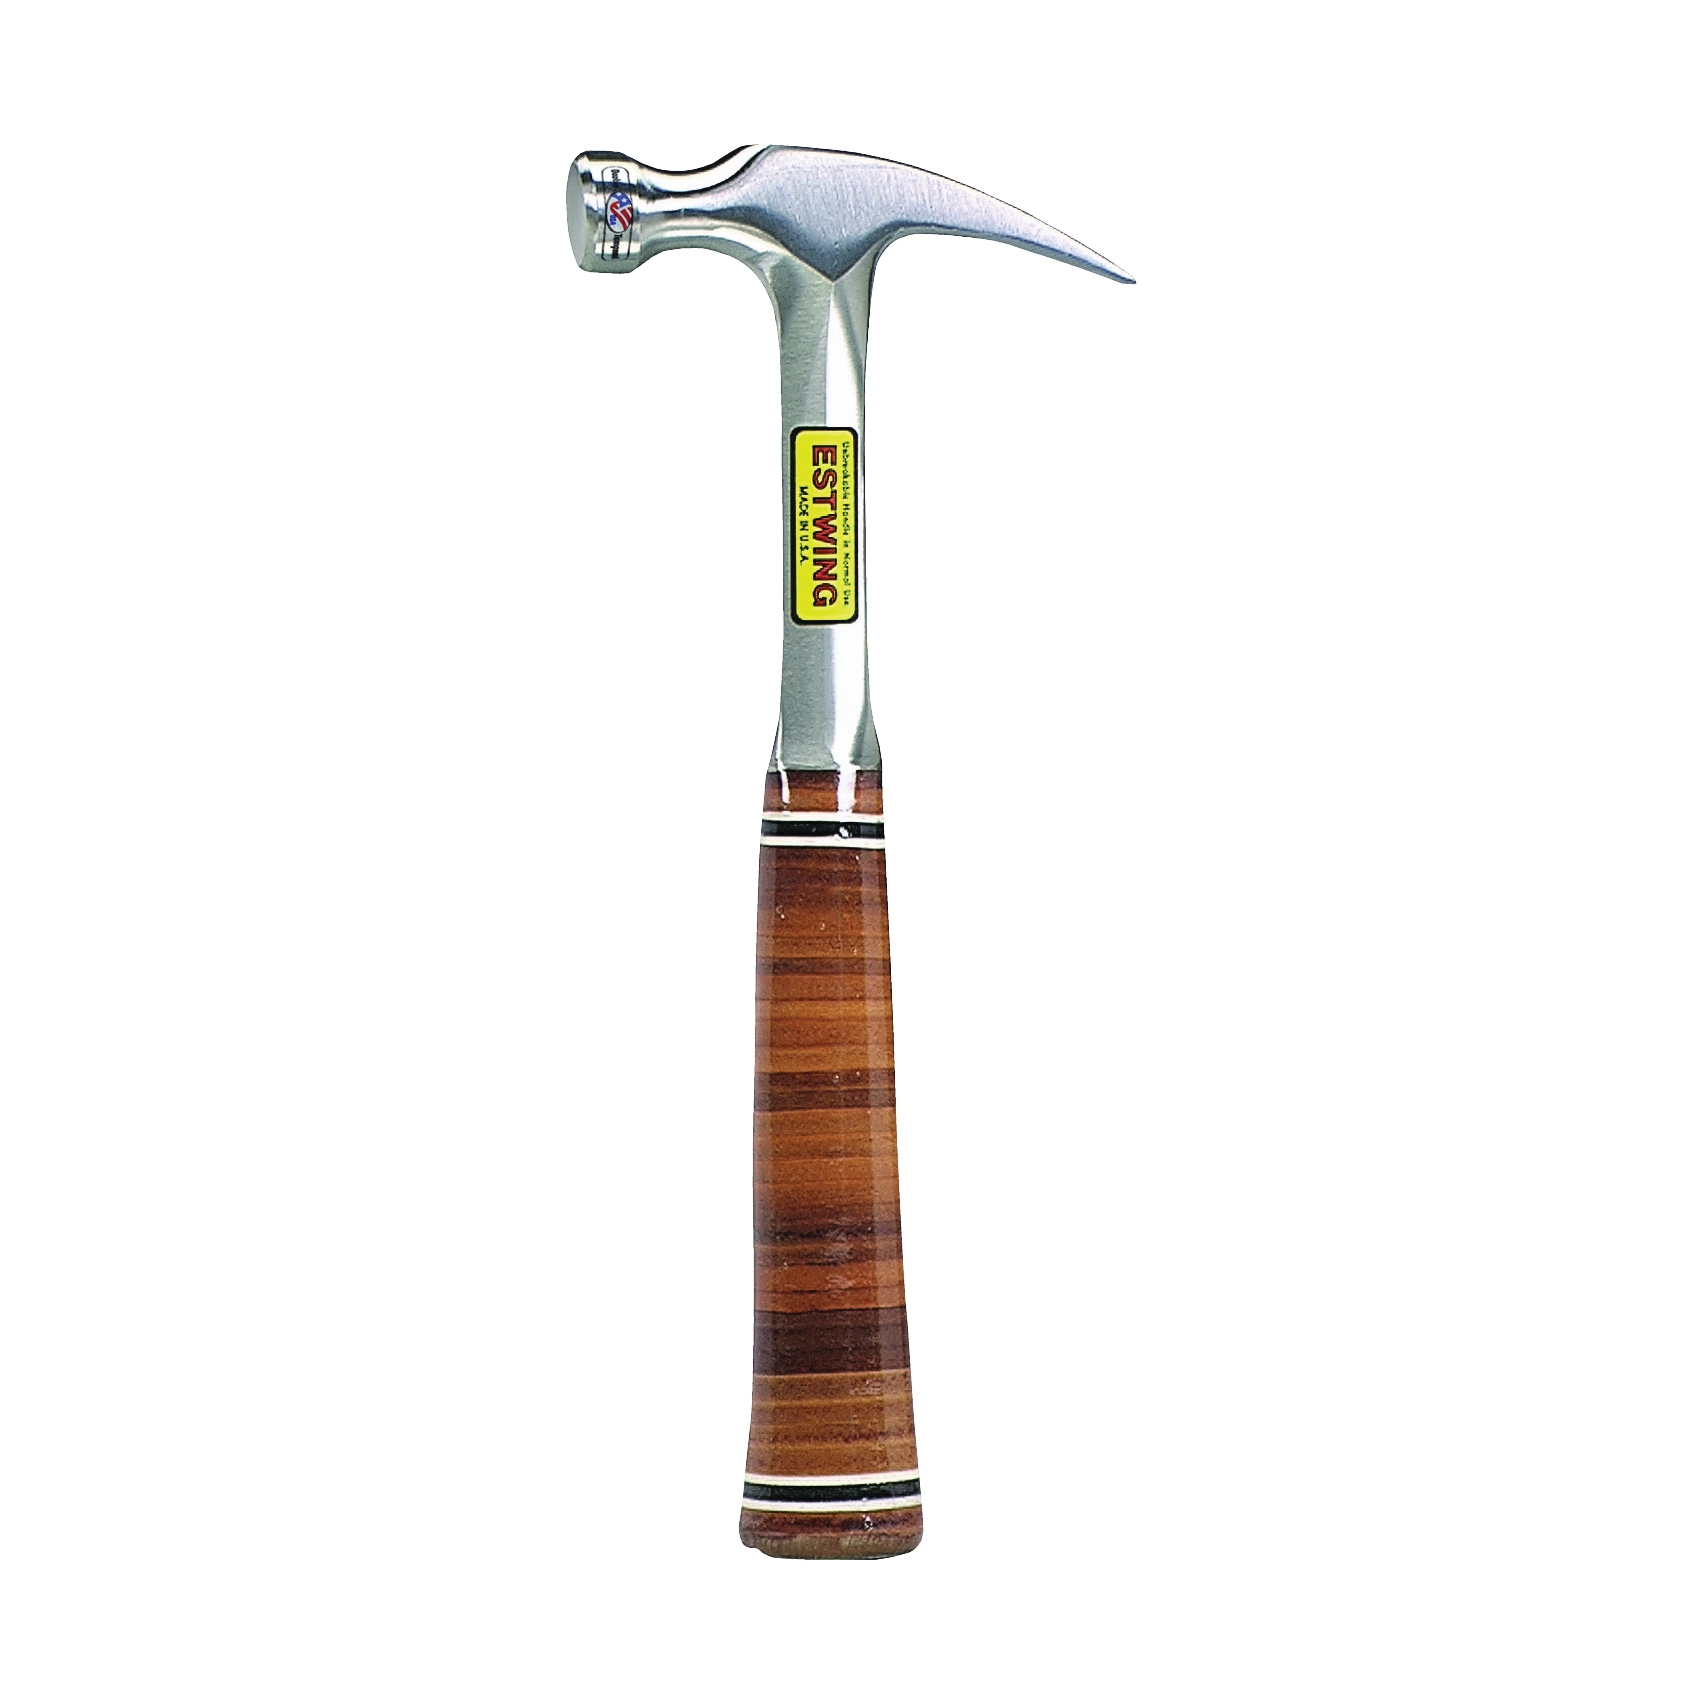 E16S Nail Hammer, 16 oz Head, Rip Claw, Smooth Head, Steel Head, 12-1/2 in OAL